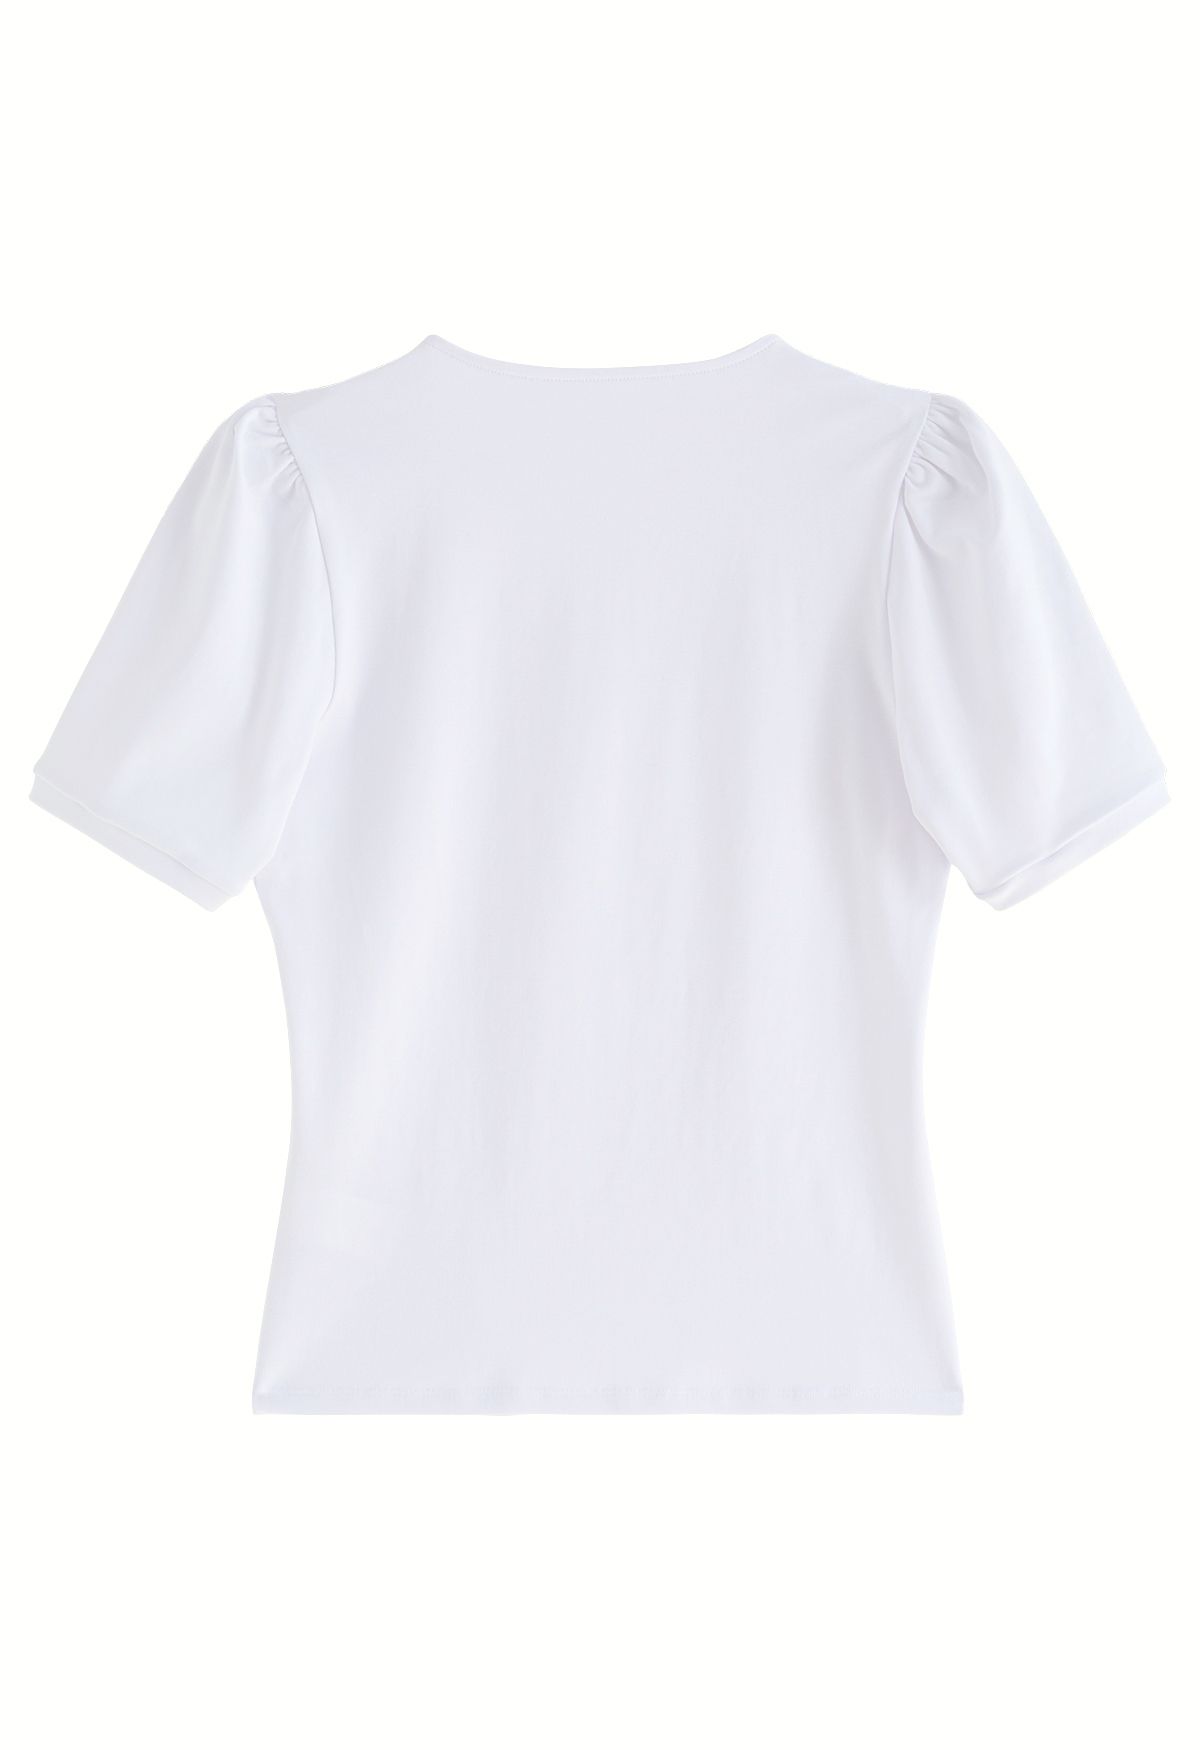 Square Neckline Puff Shoulder T-Shirt in White